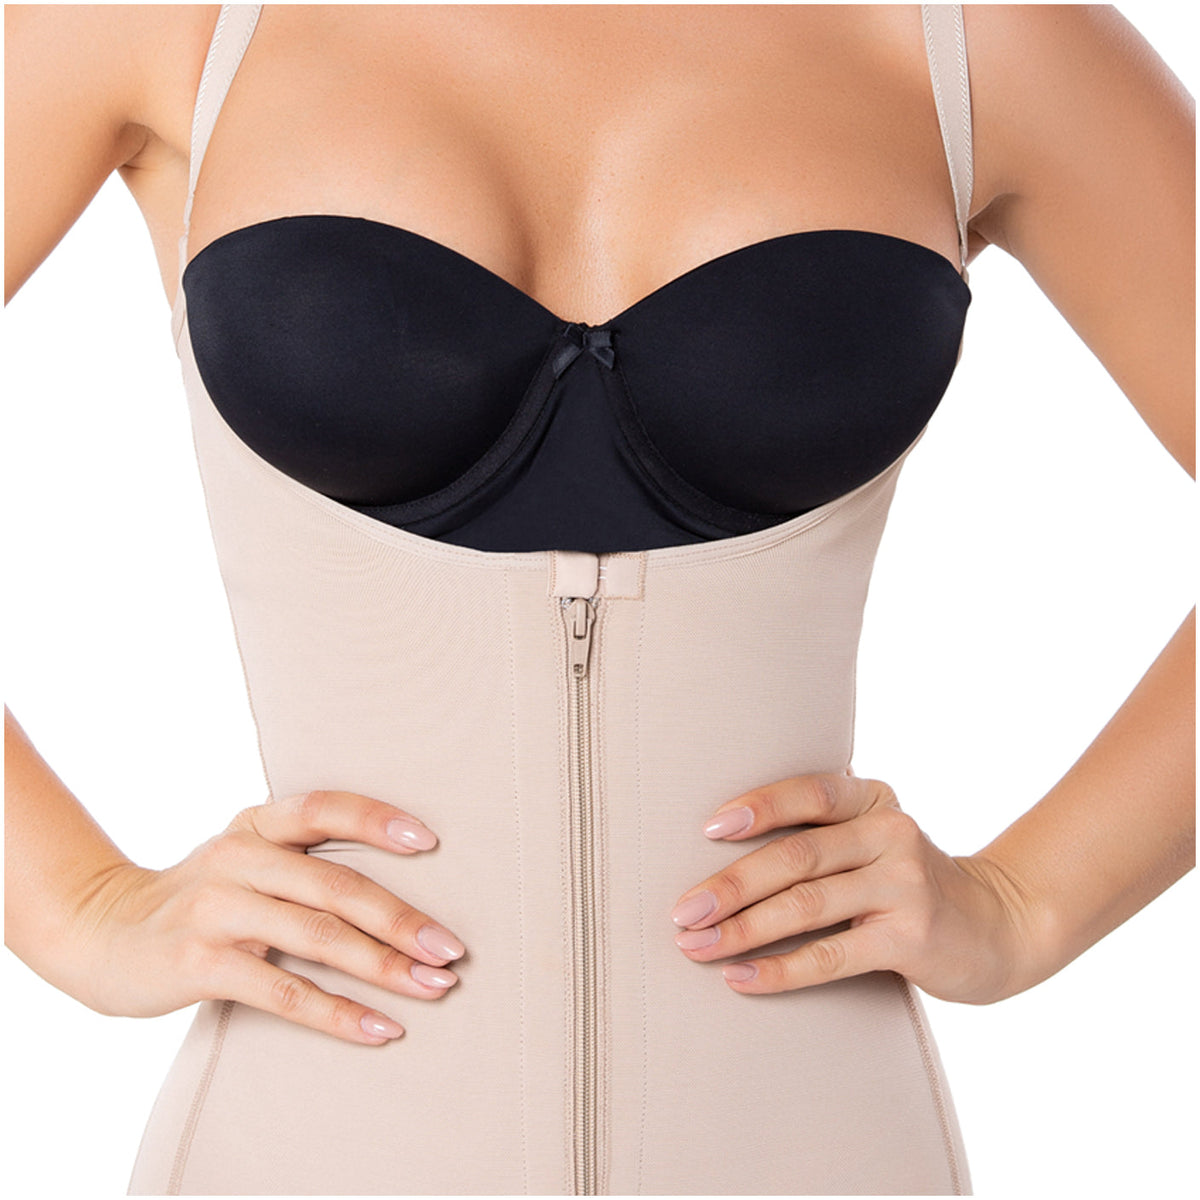 Diane & Geordi 2411 Women's Tummy Control Butt Lifting Bodysuit Postpa –  Melao Boutique